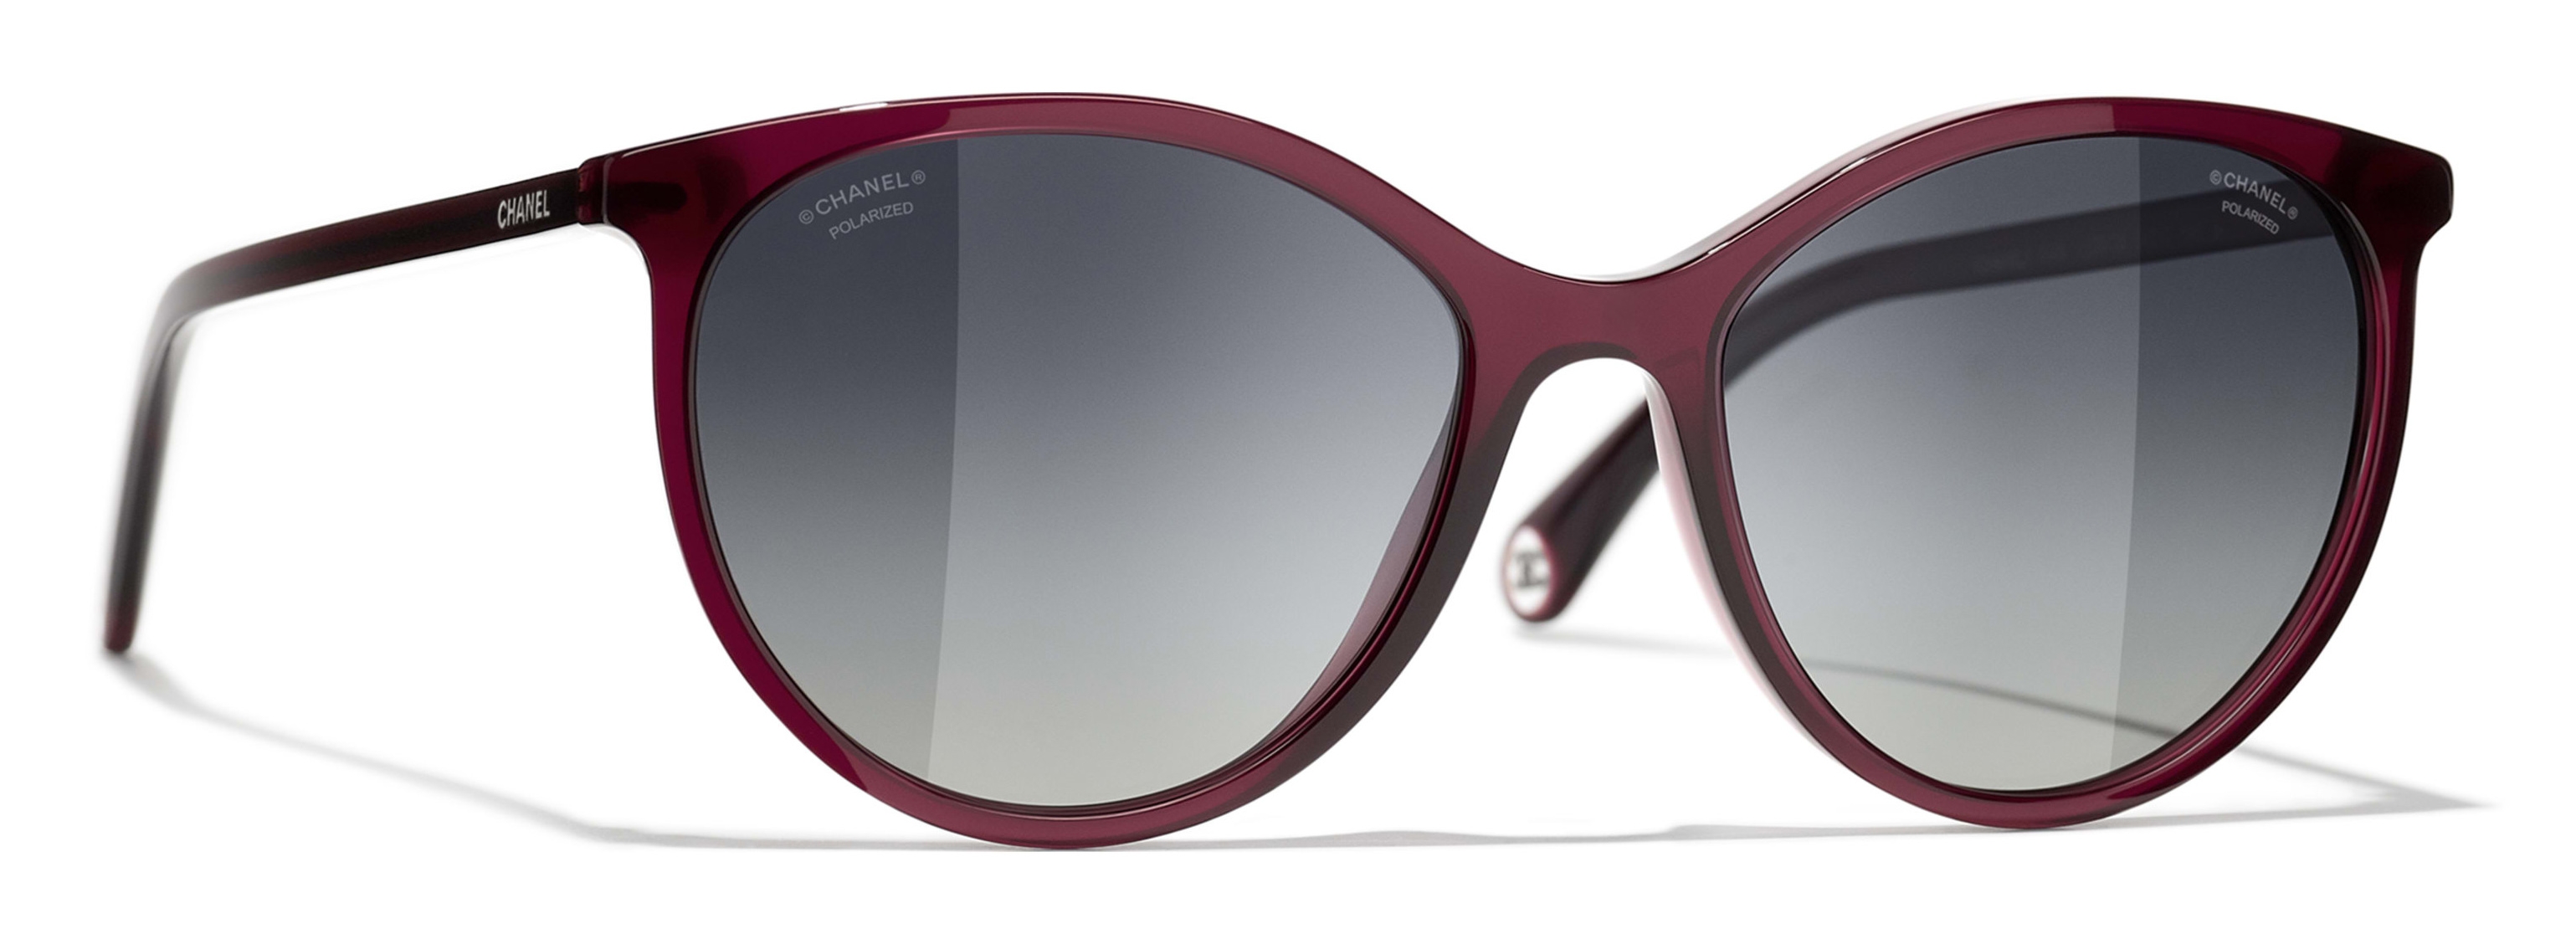 Chanel - Round Sunglasses - Silver Pink - Chanel Eyewear - Avvenice